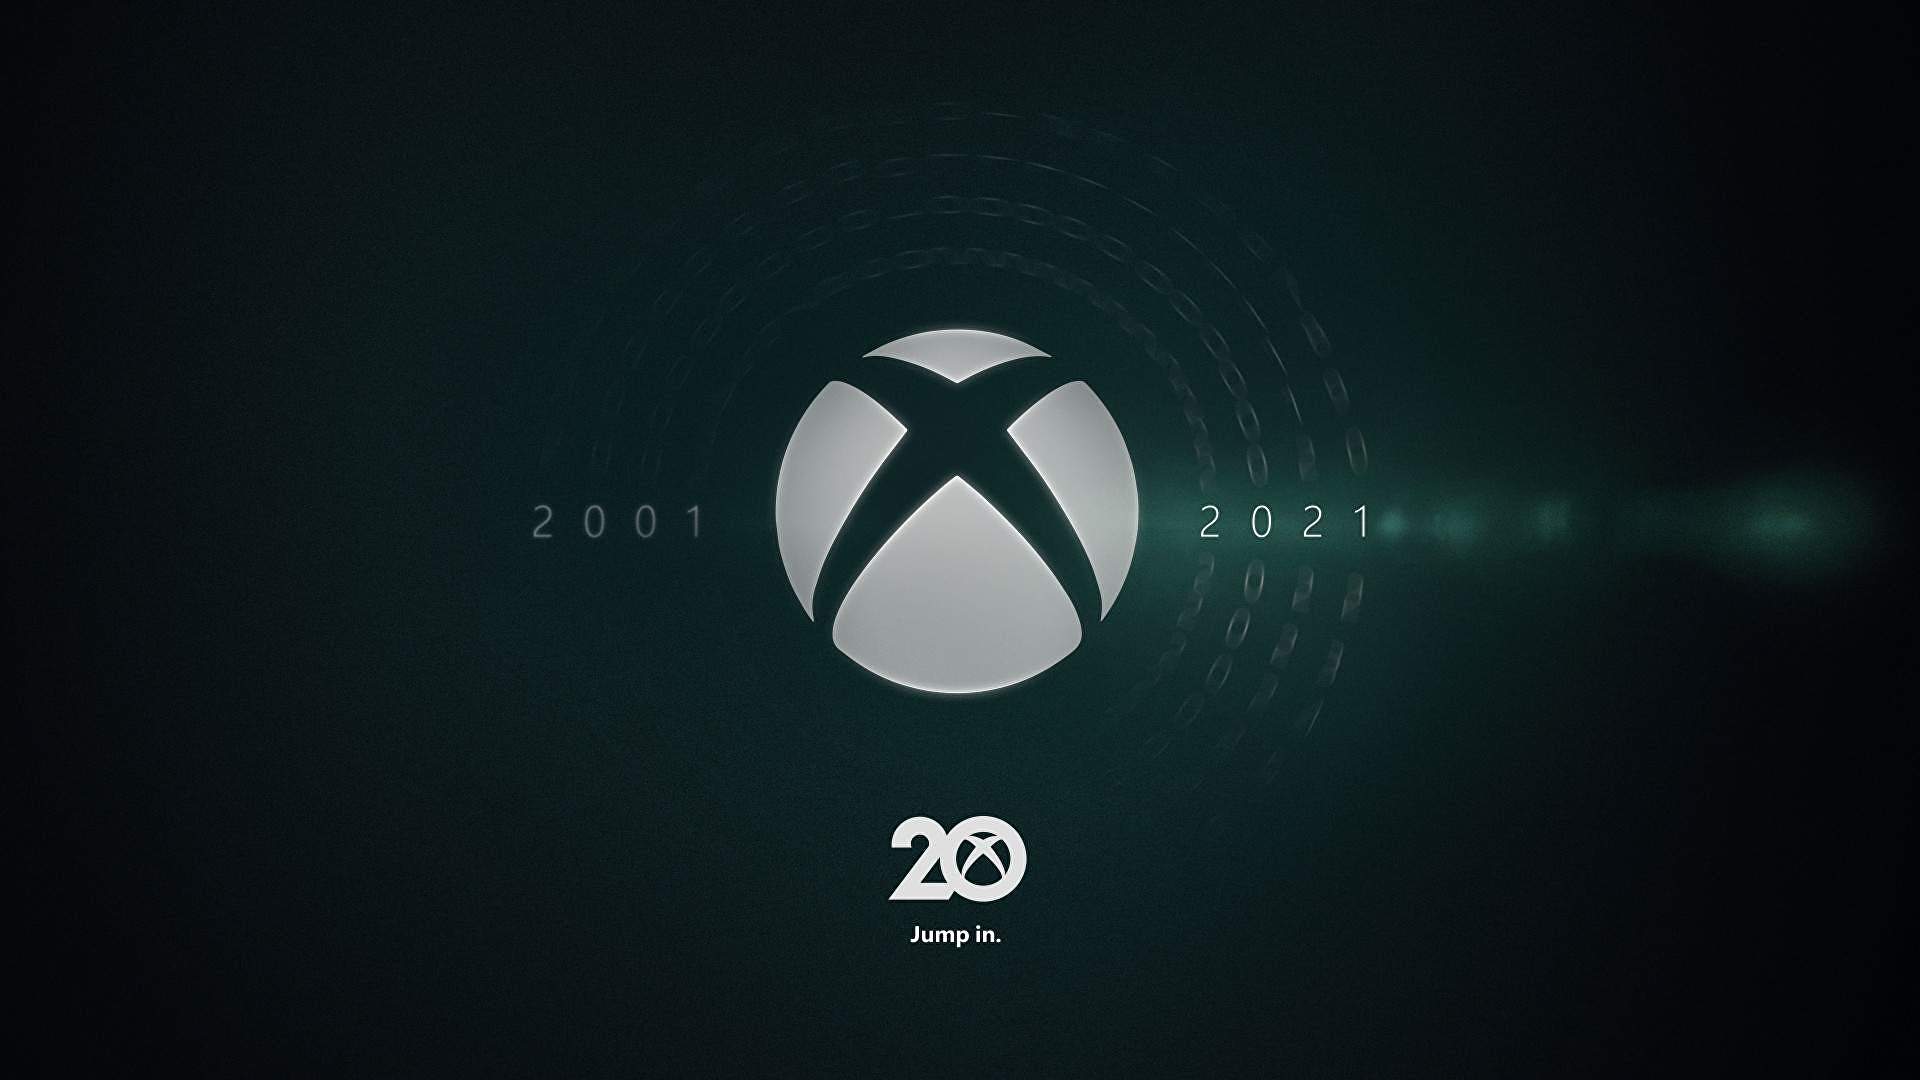 Xbox 20 urteurrena 1